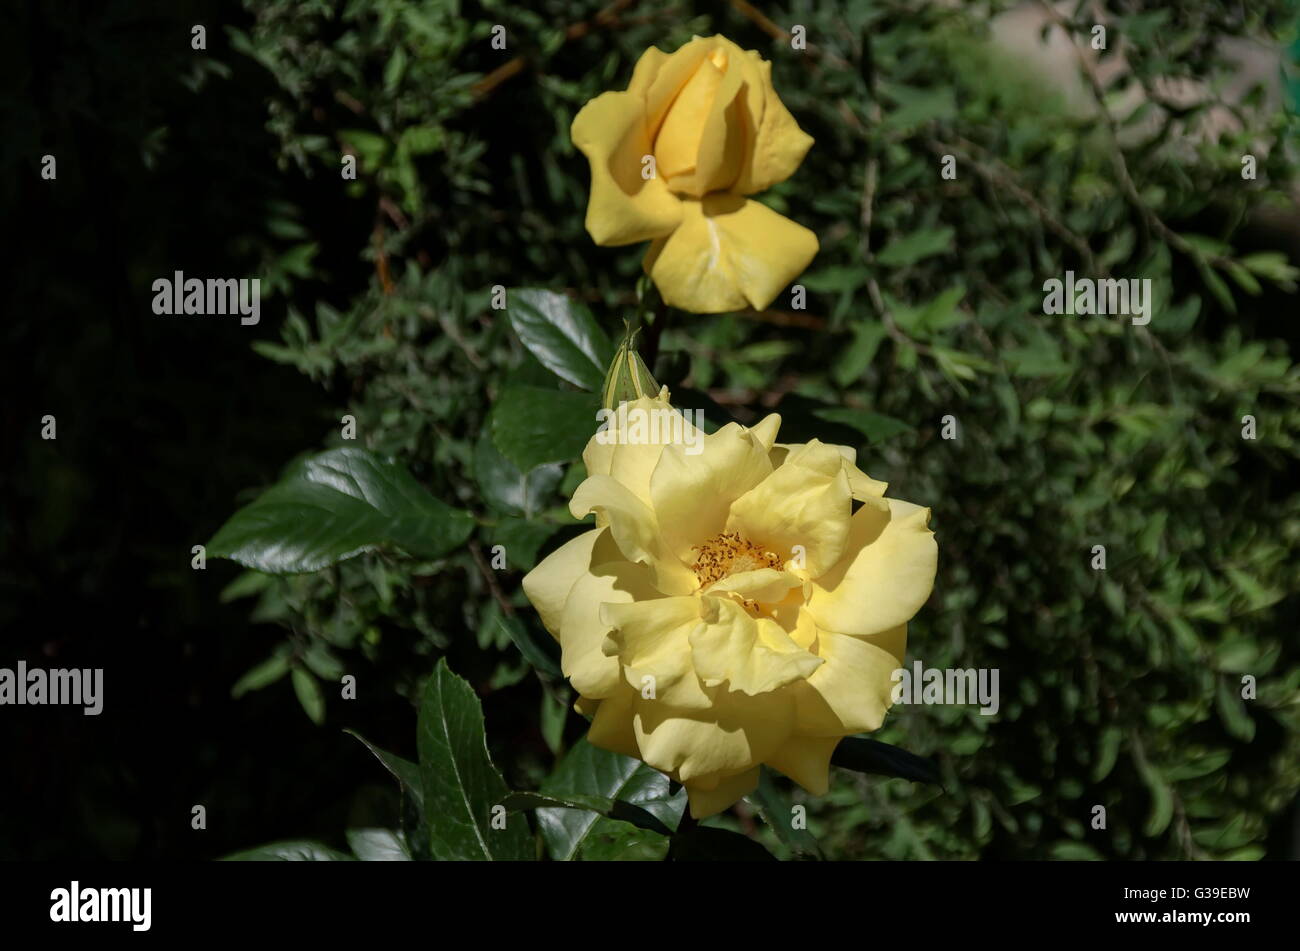 Yellow rose bush in bloom at natural outdoor garden, Sofia, Bulgaria Stock Photo